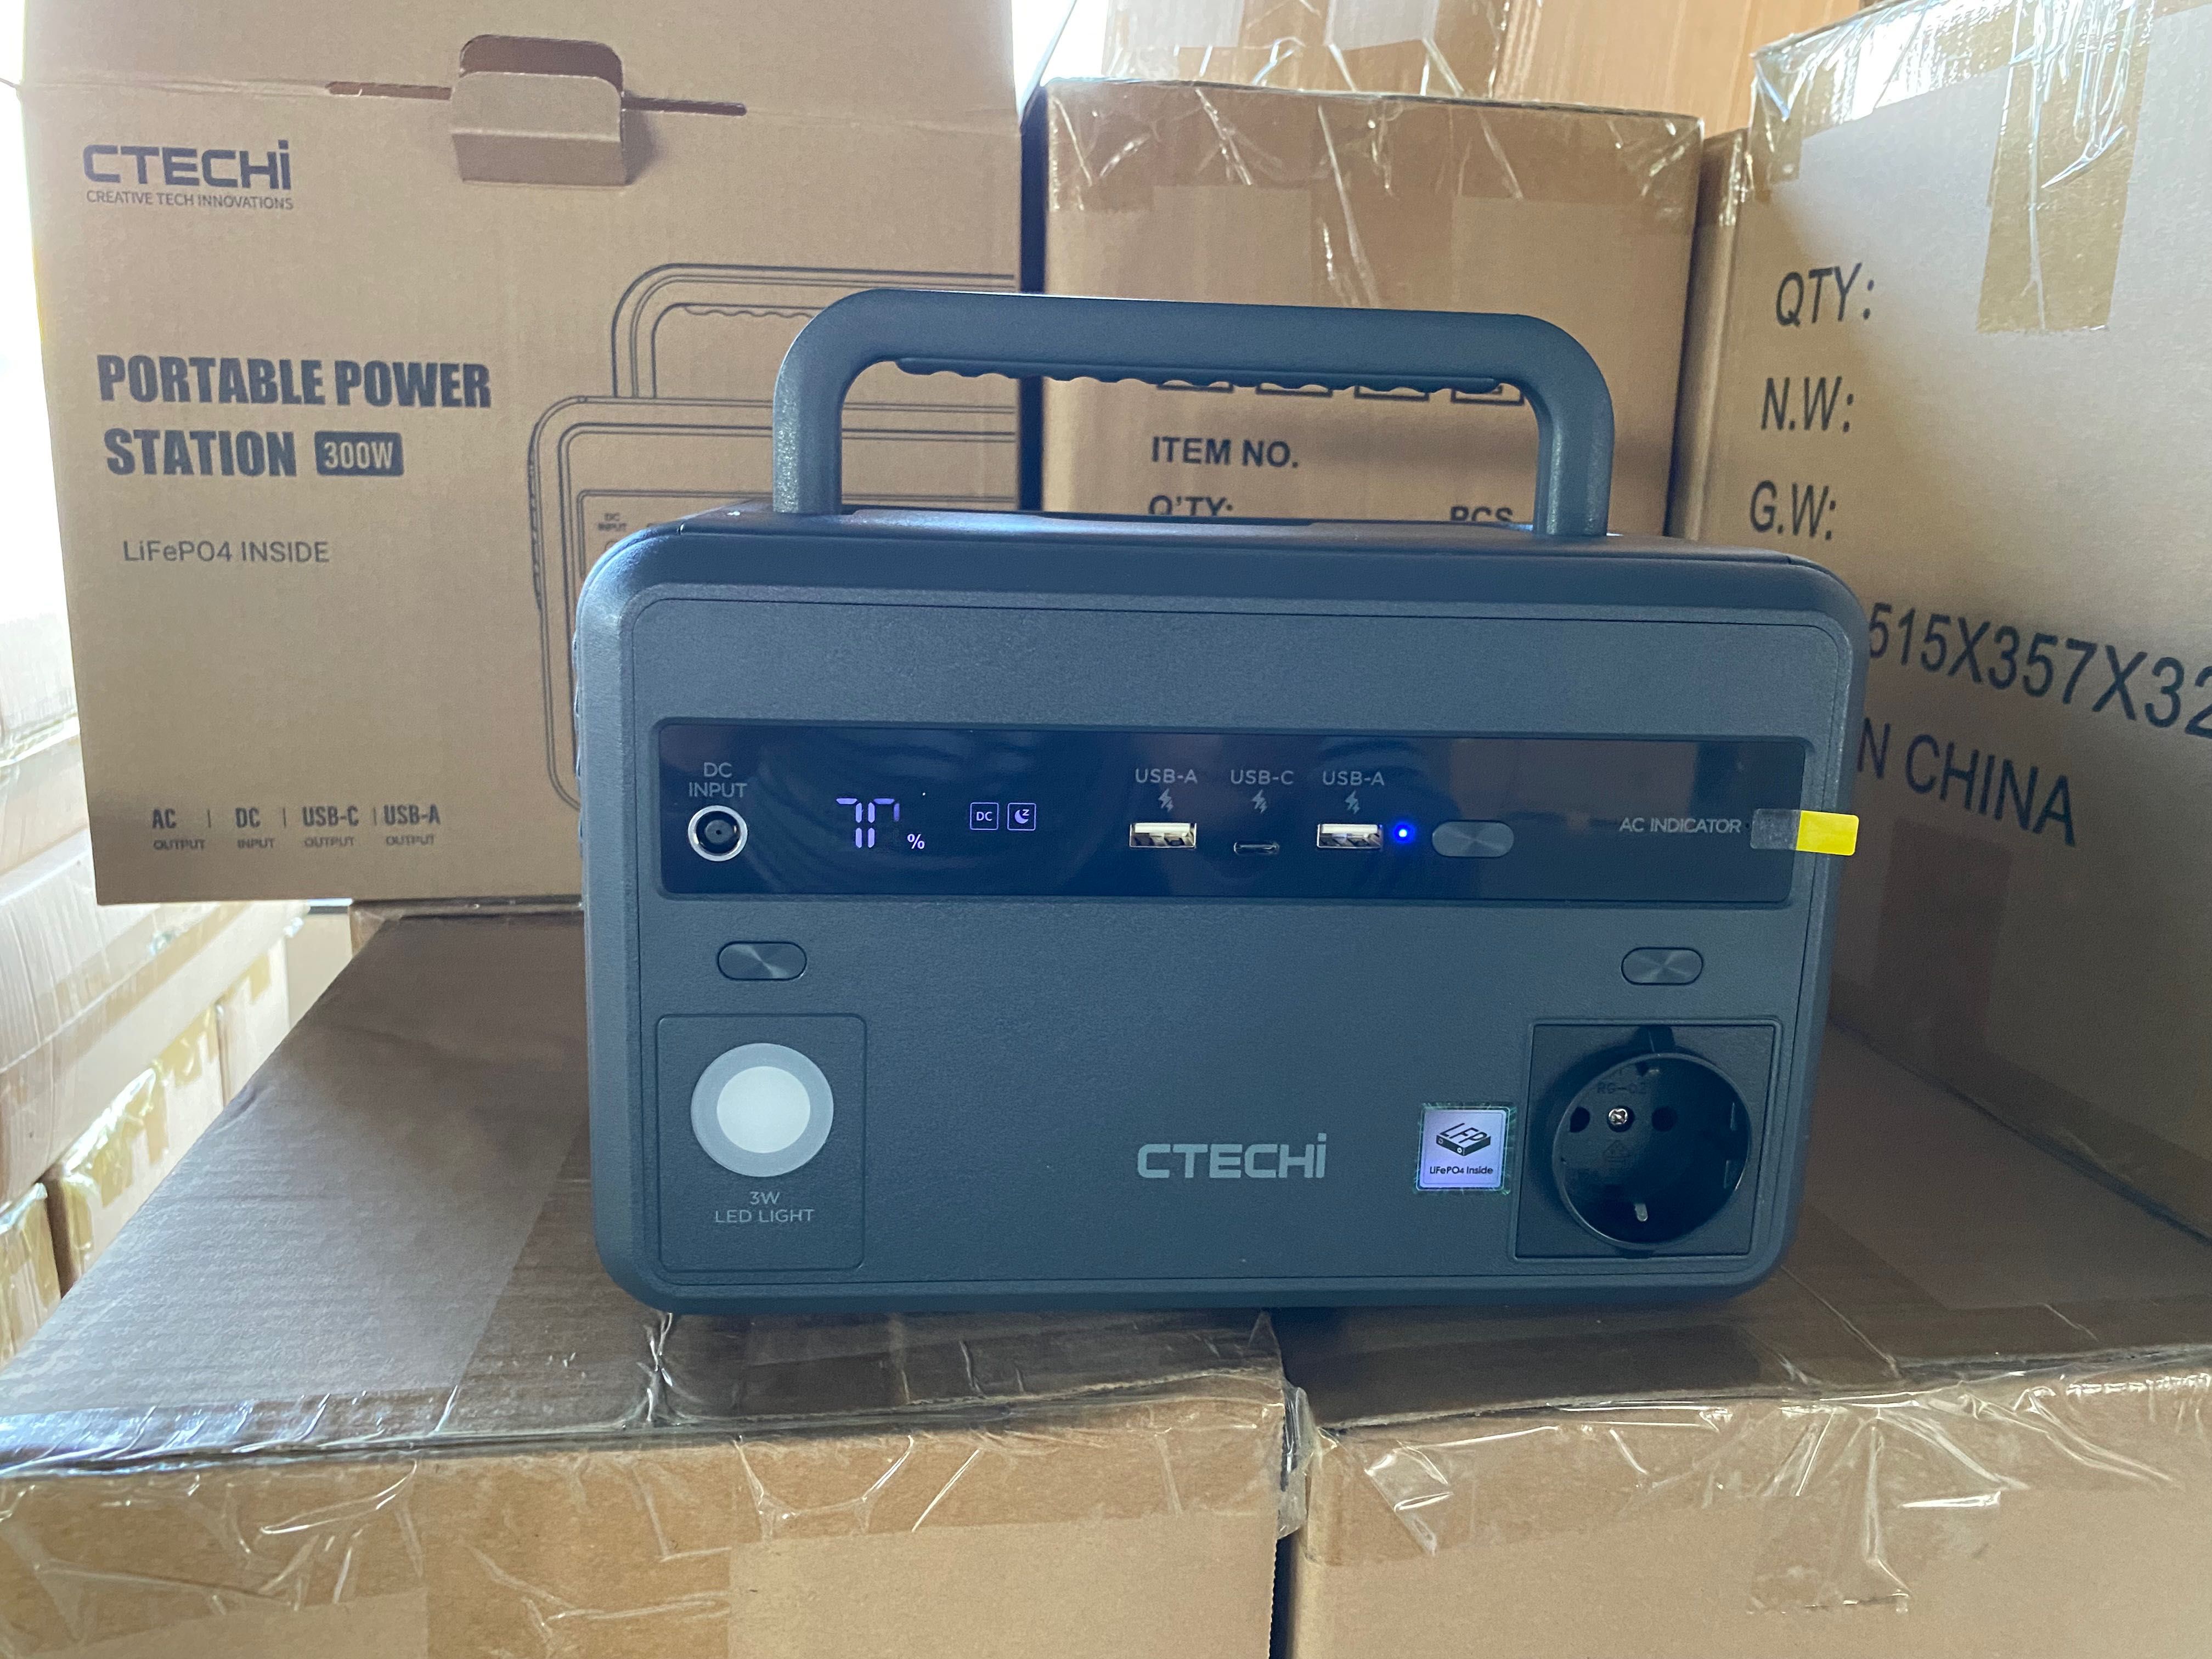 Портативна зарядна станція GT300 Portable Power Station CTECHi